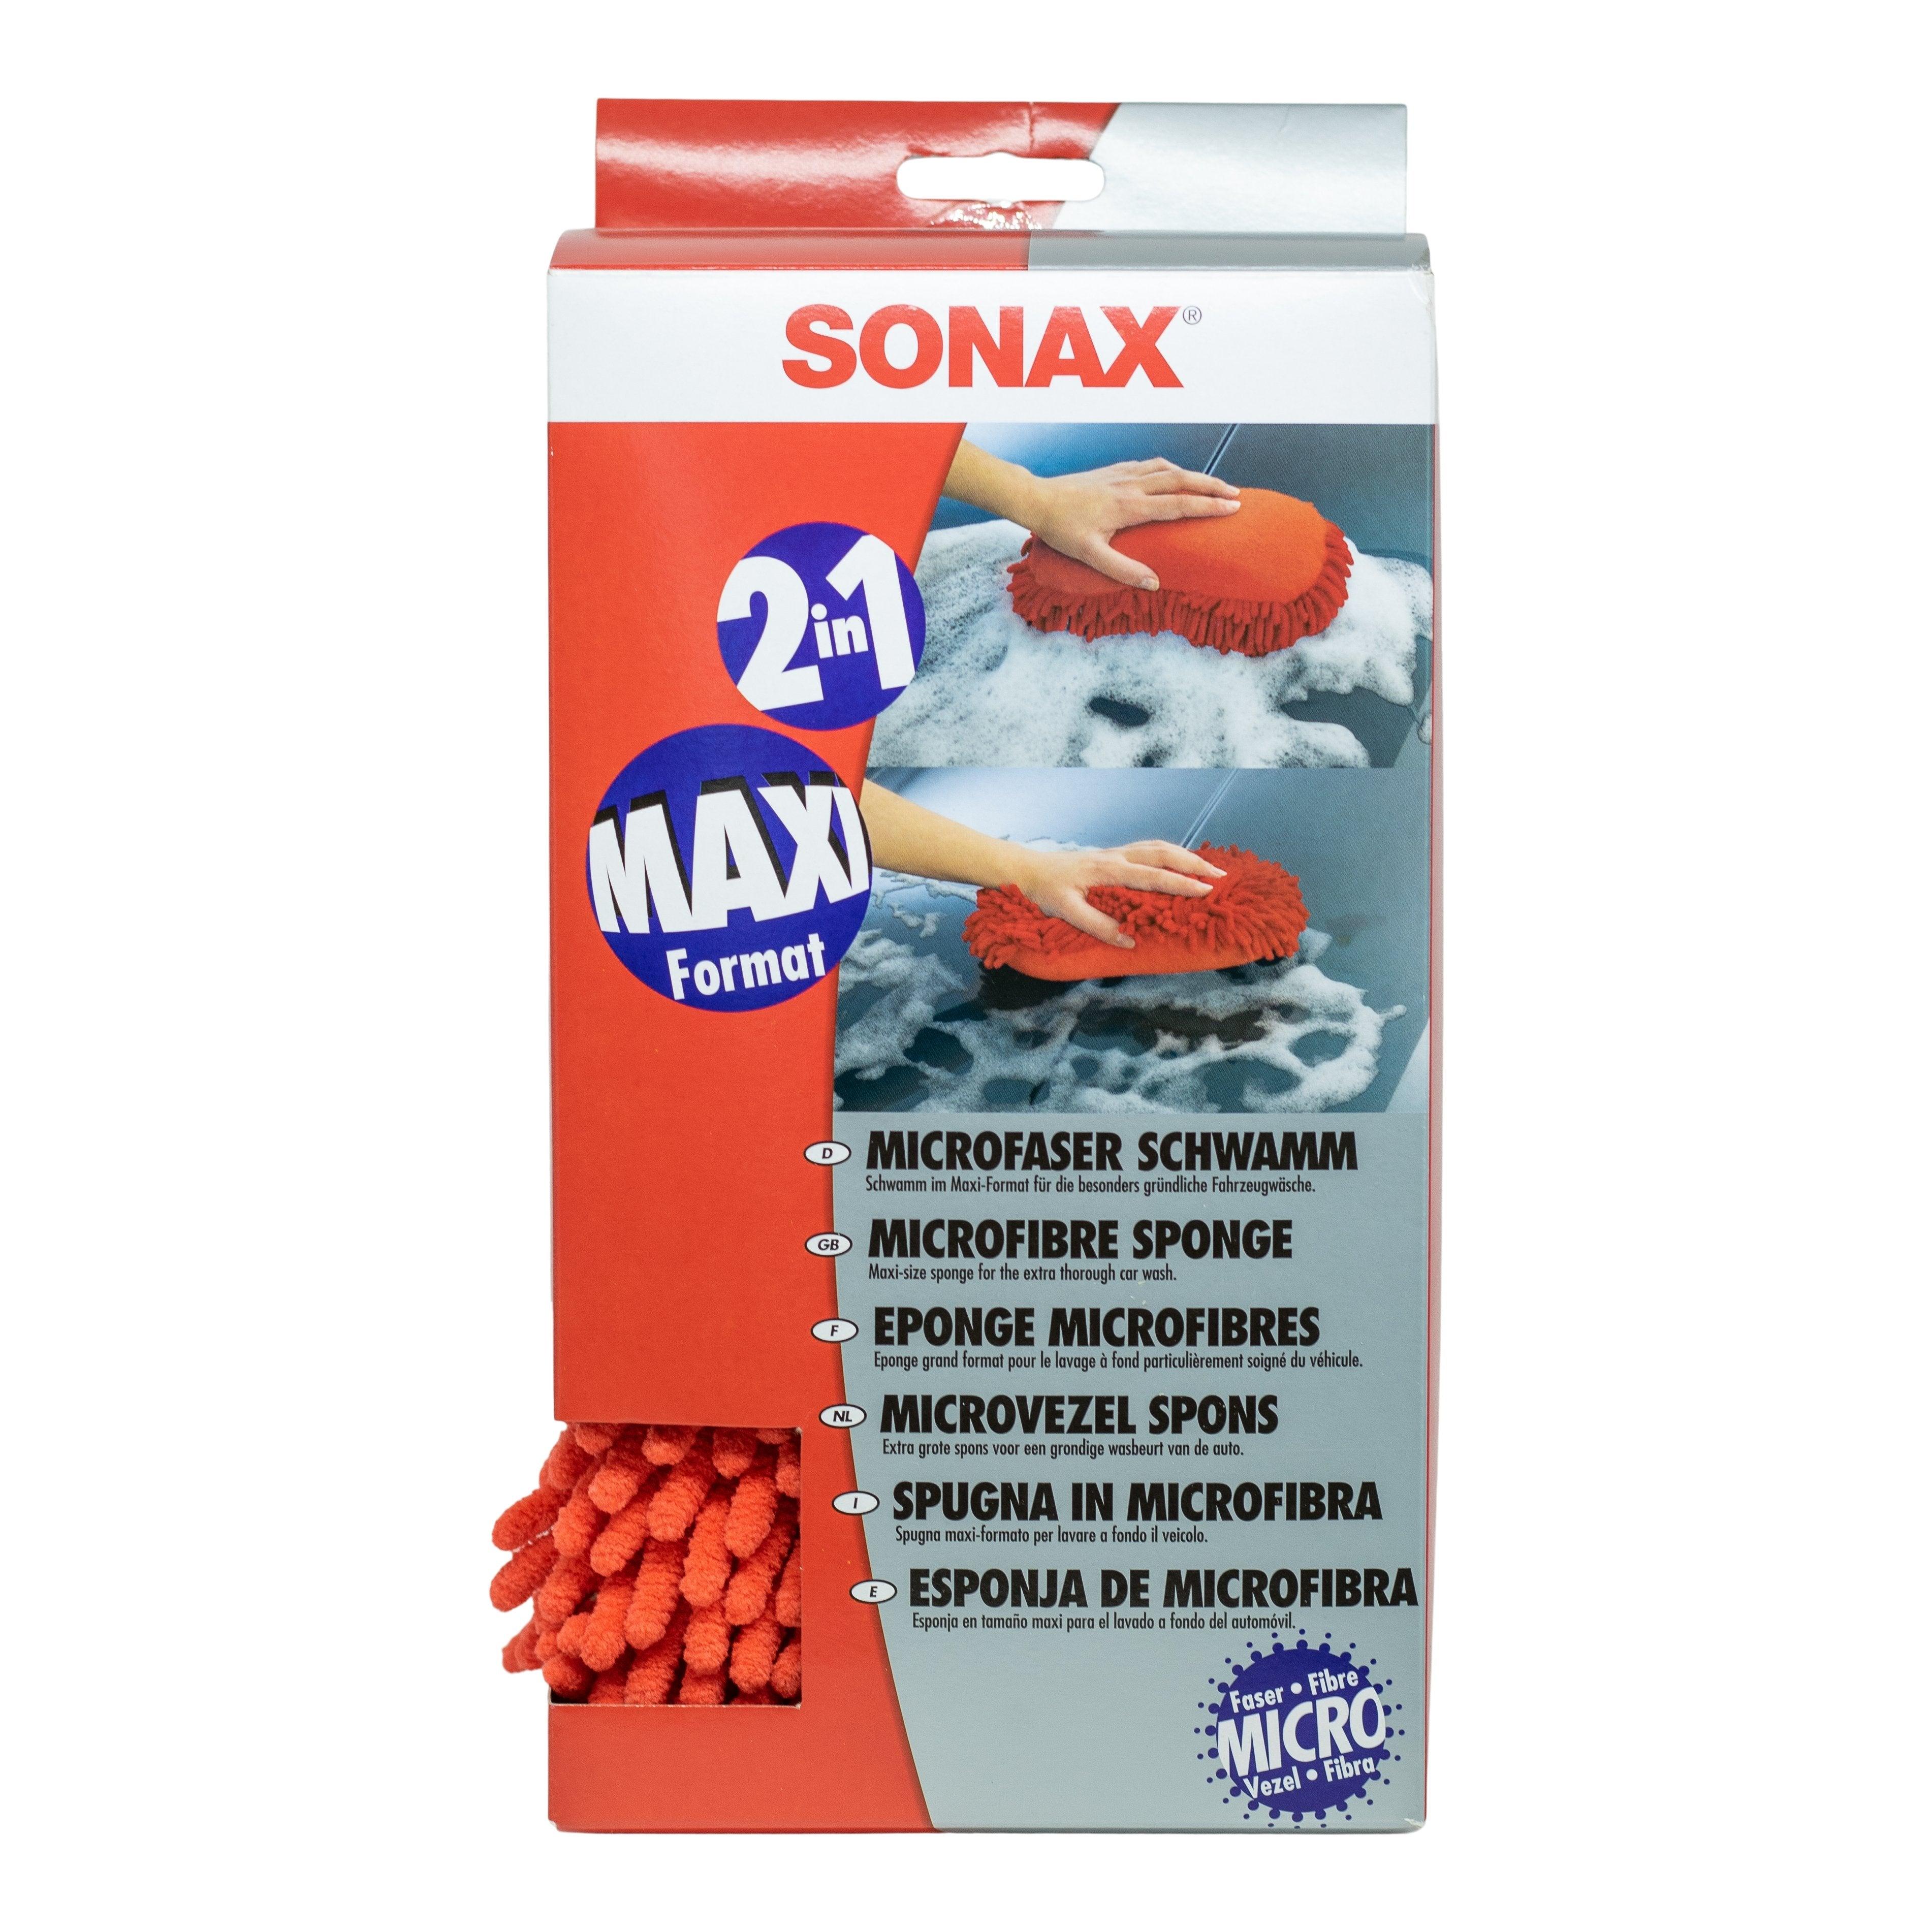 SONAX Microfiber Svamp - Xpert Cleaning